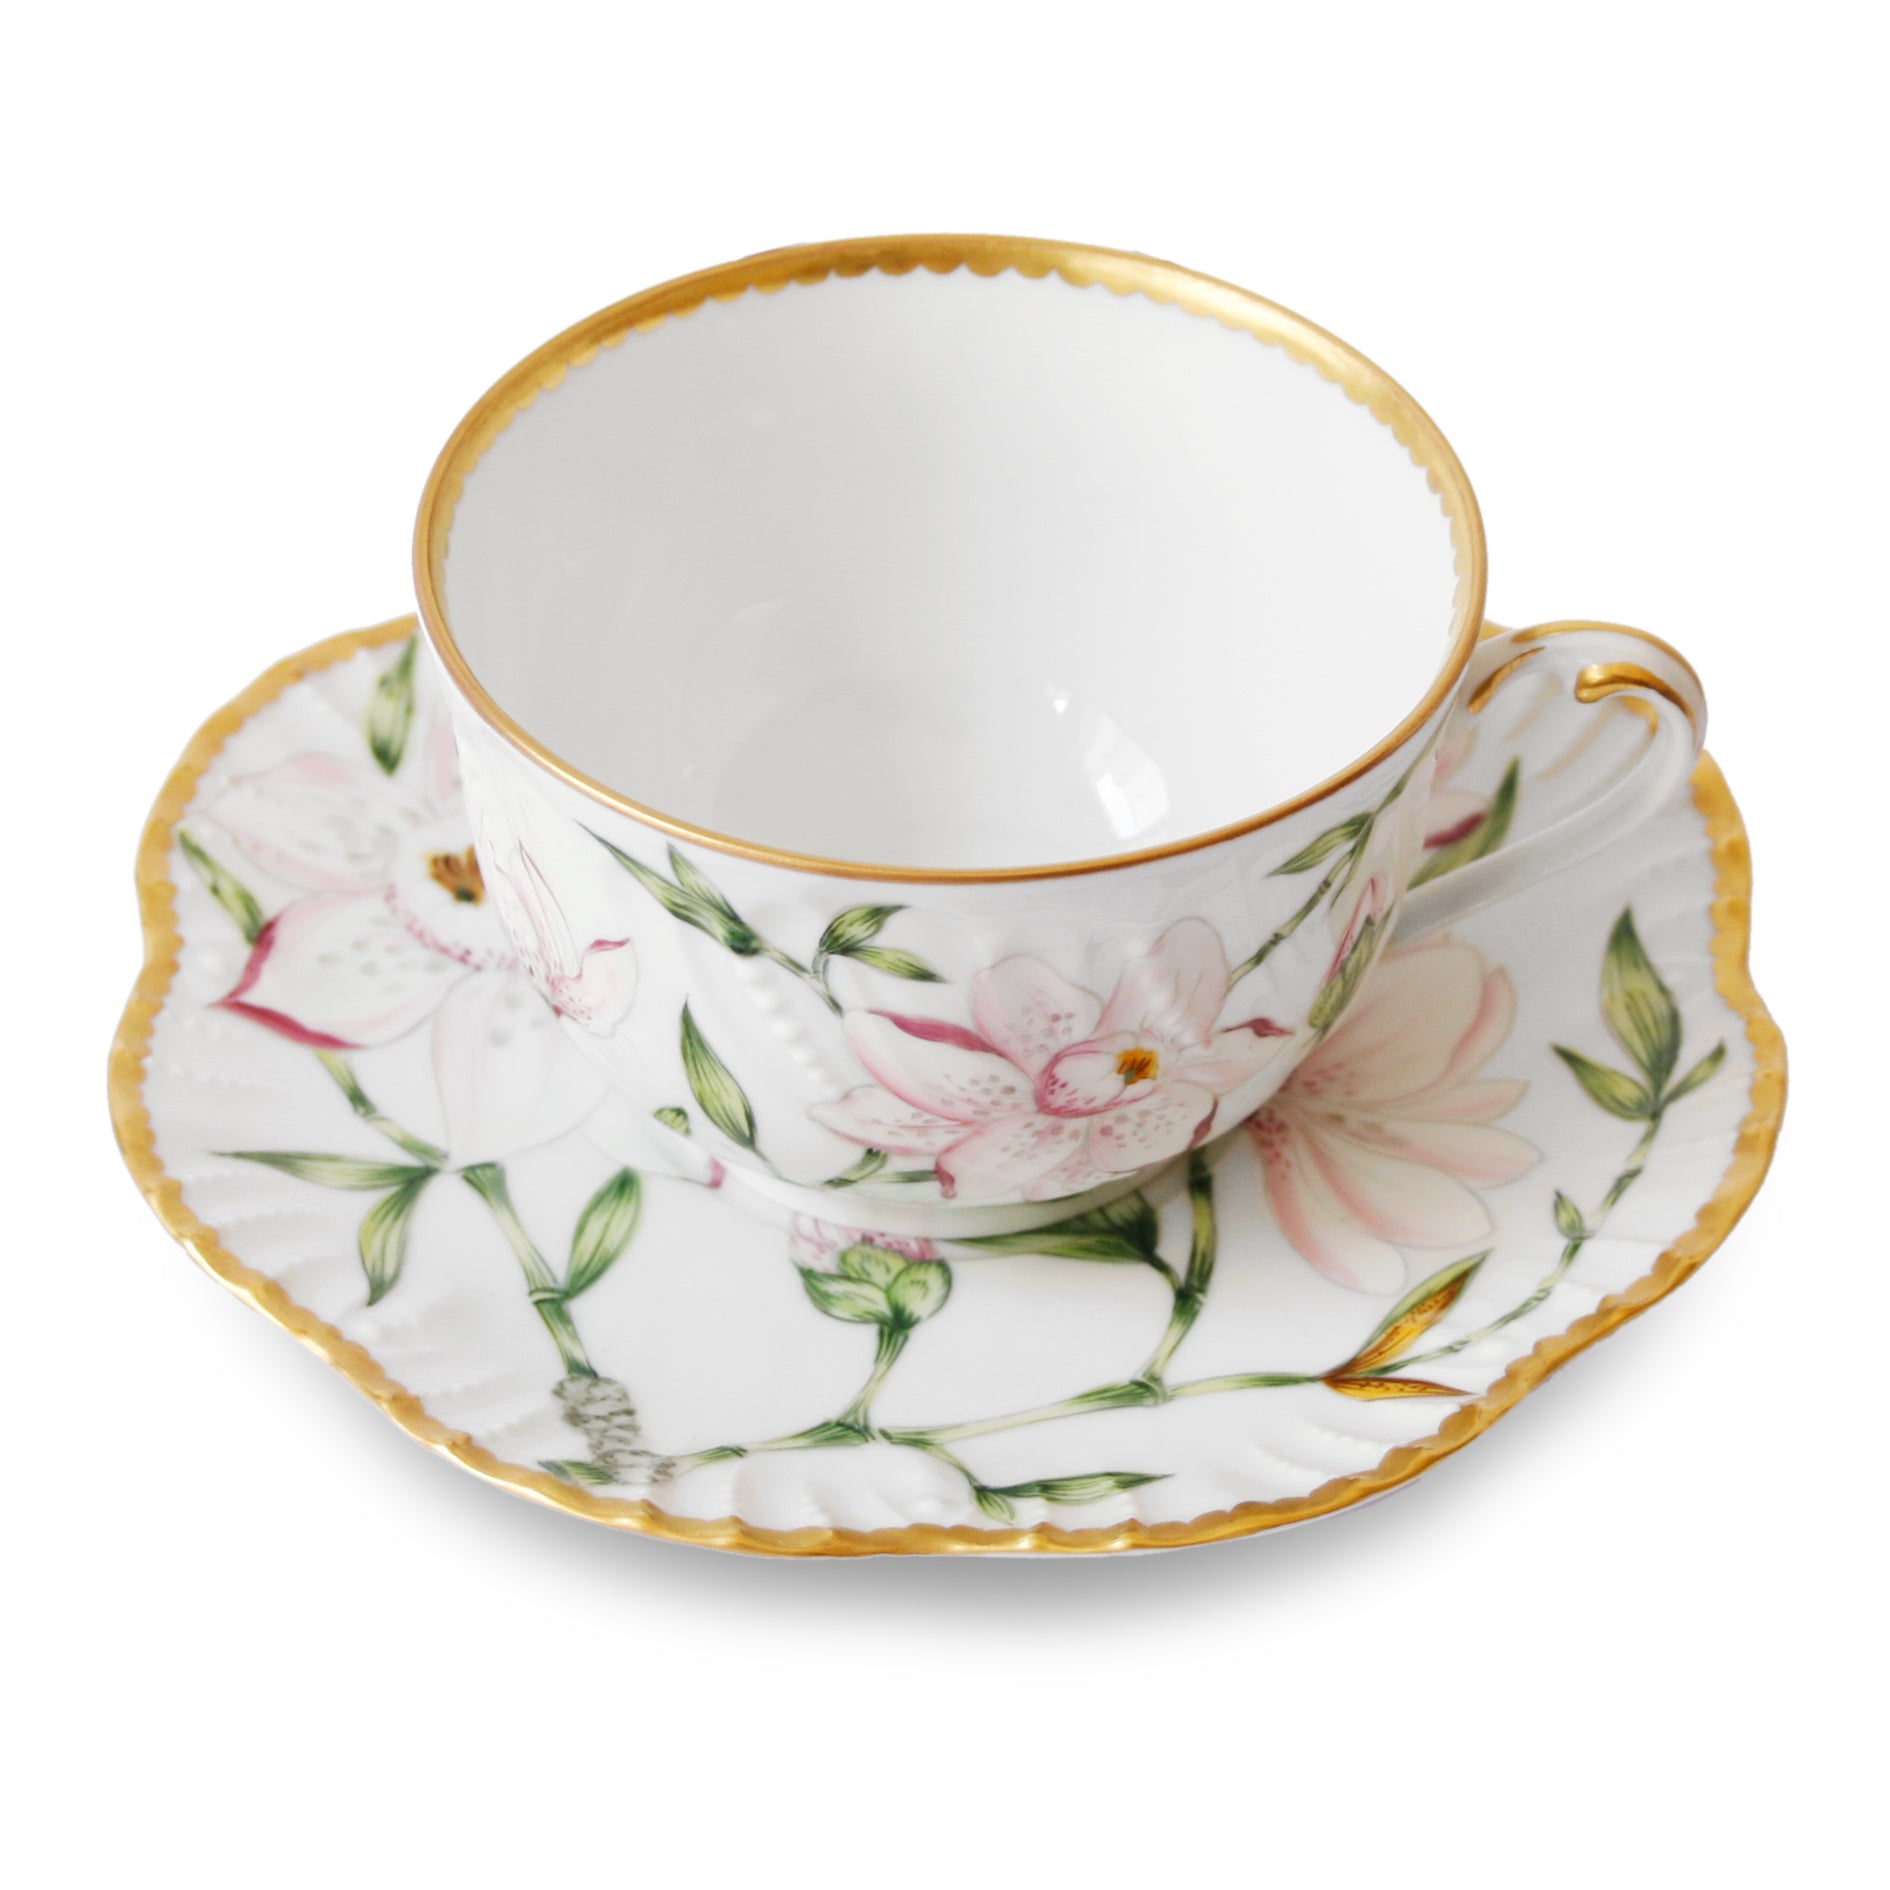 Magnolia - Tea cup and saucer
